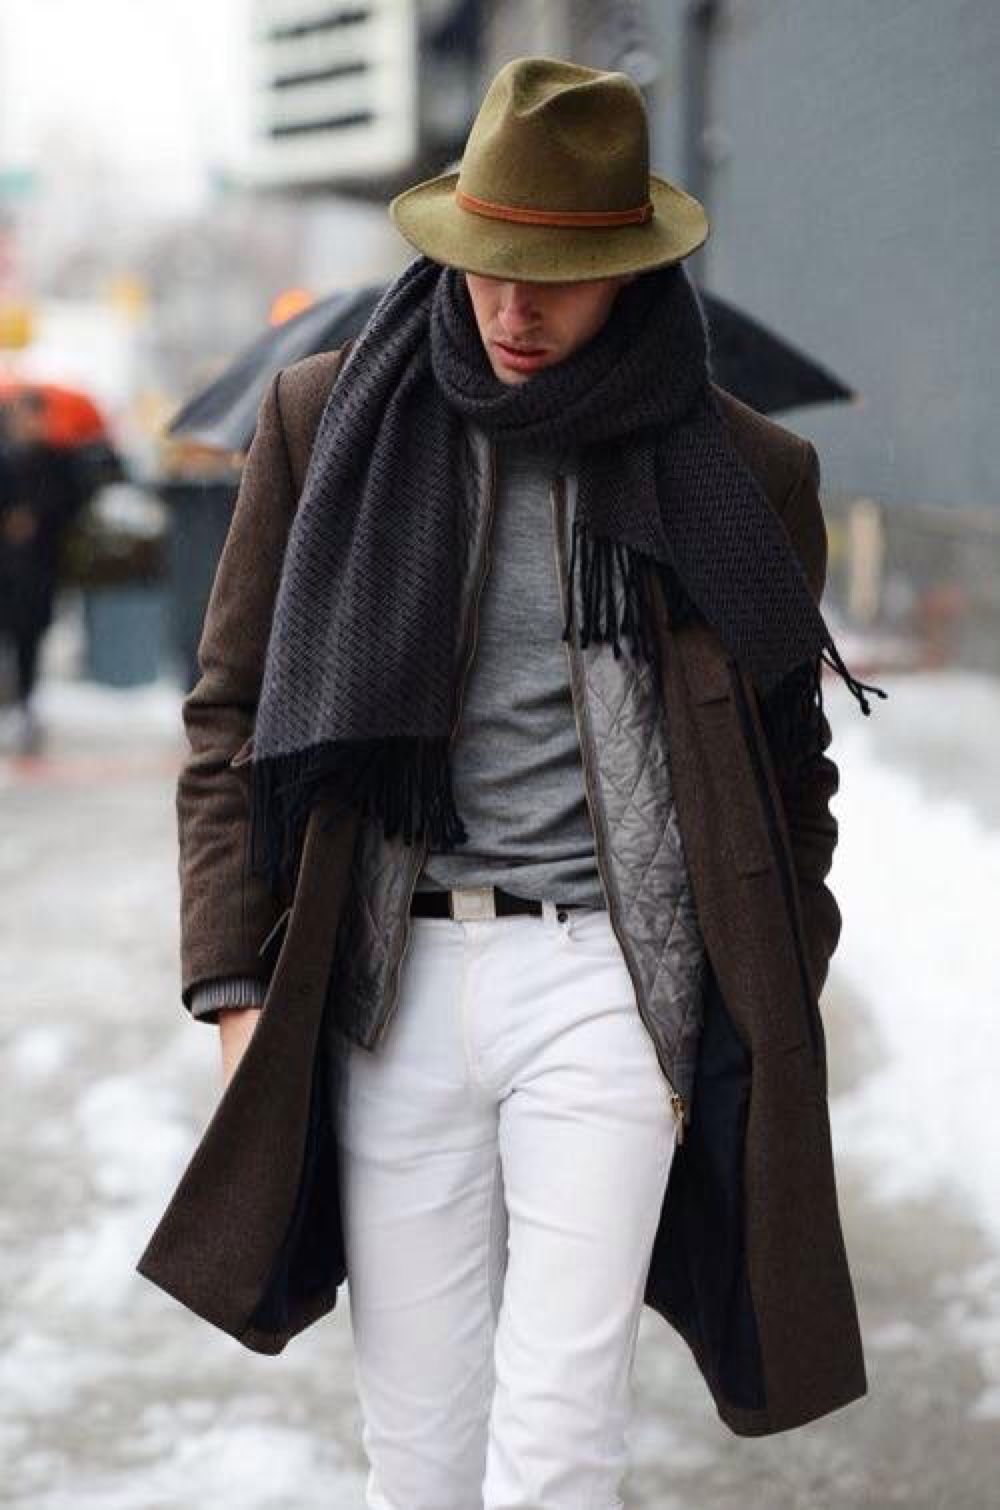 По верх платка была надета шляпа. Шляпа Street stail Mens. Пальто и шляпа мужские. Шляпа под пальто мужское. Мужской стиль со шляпой.